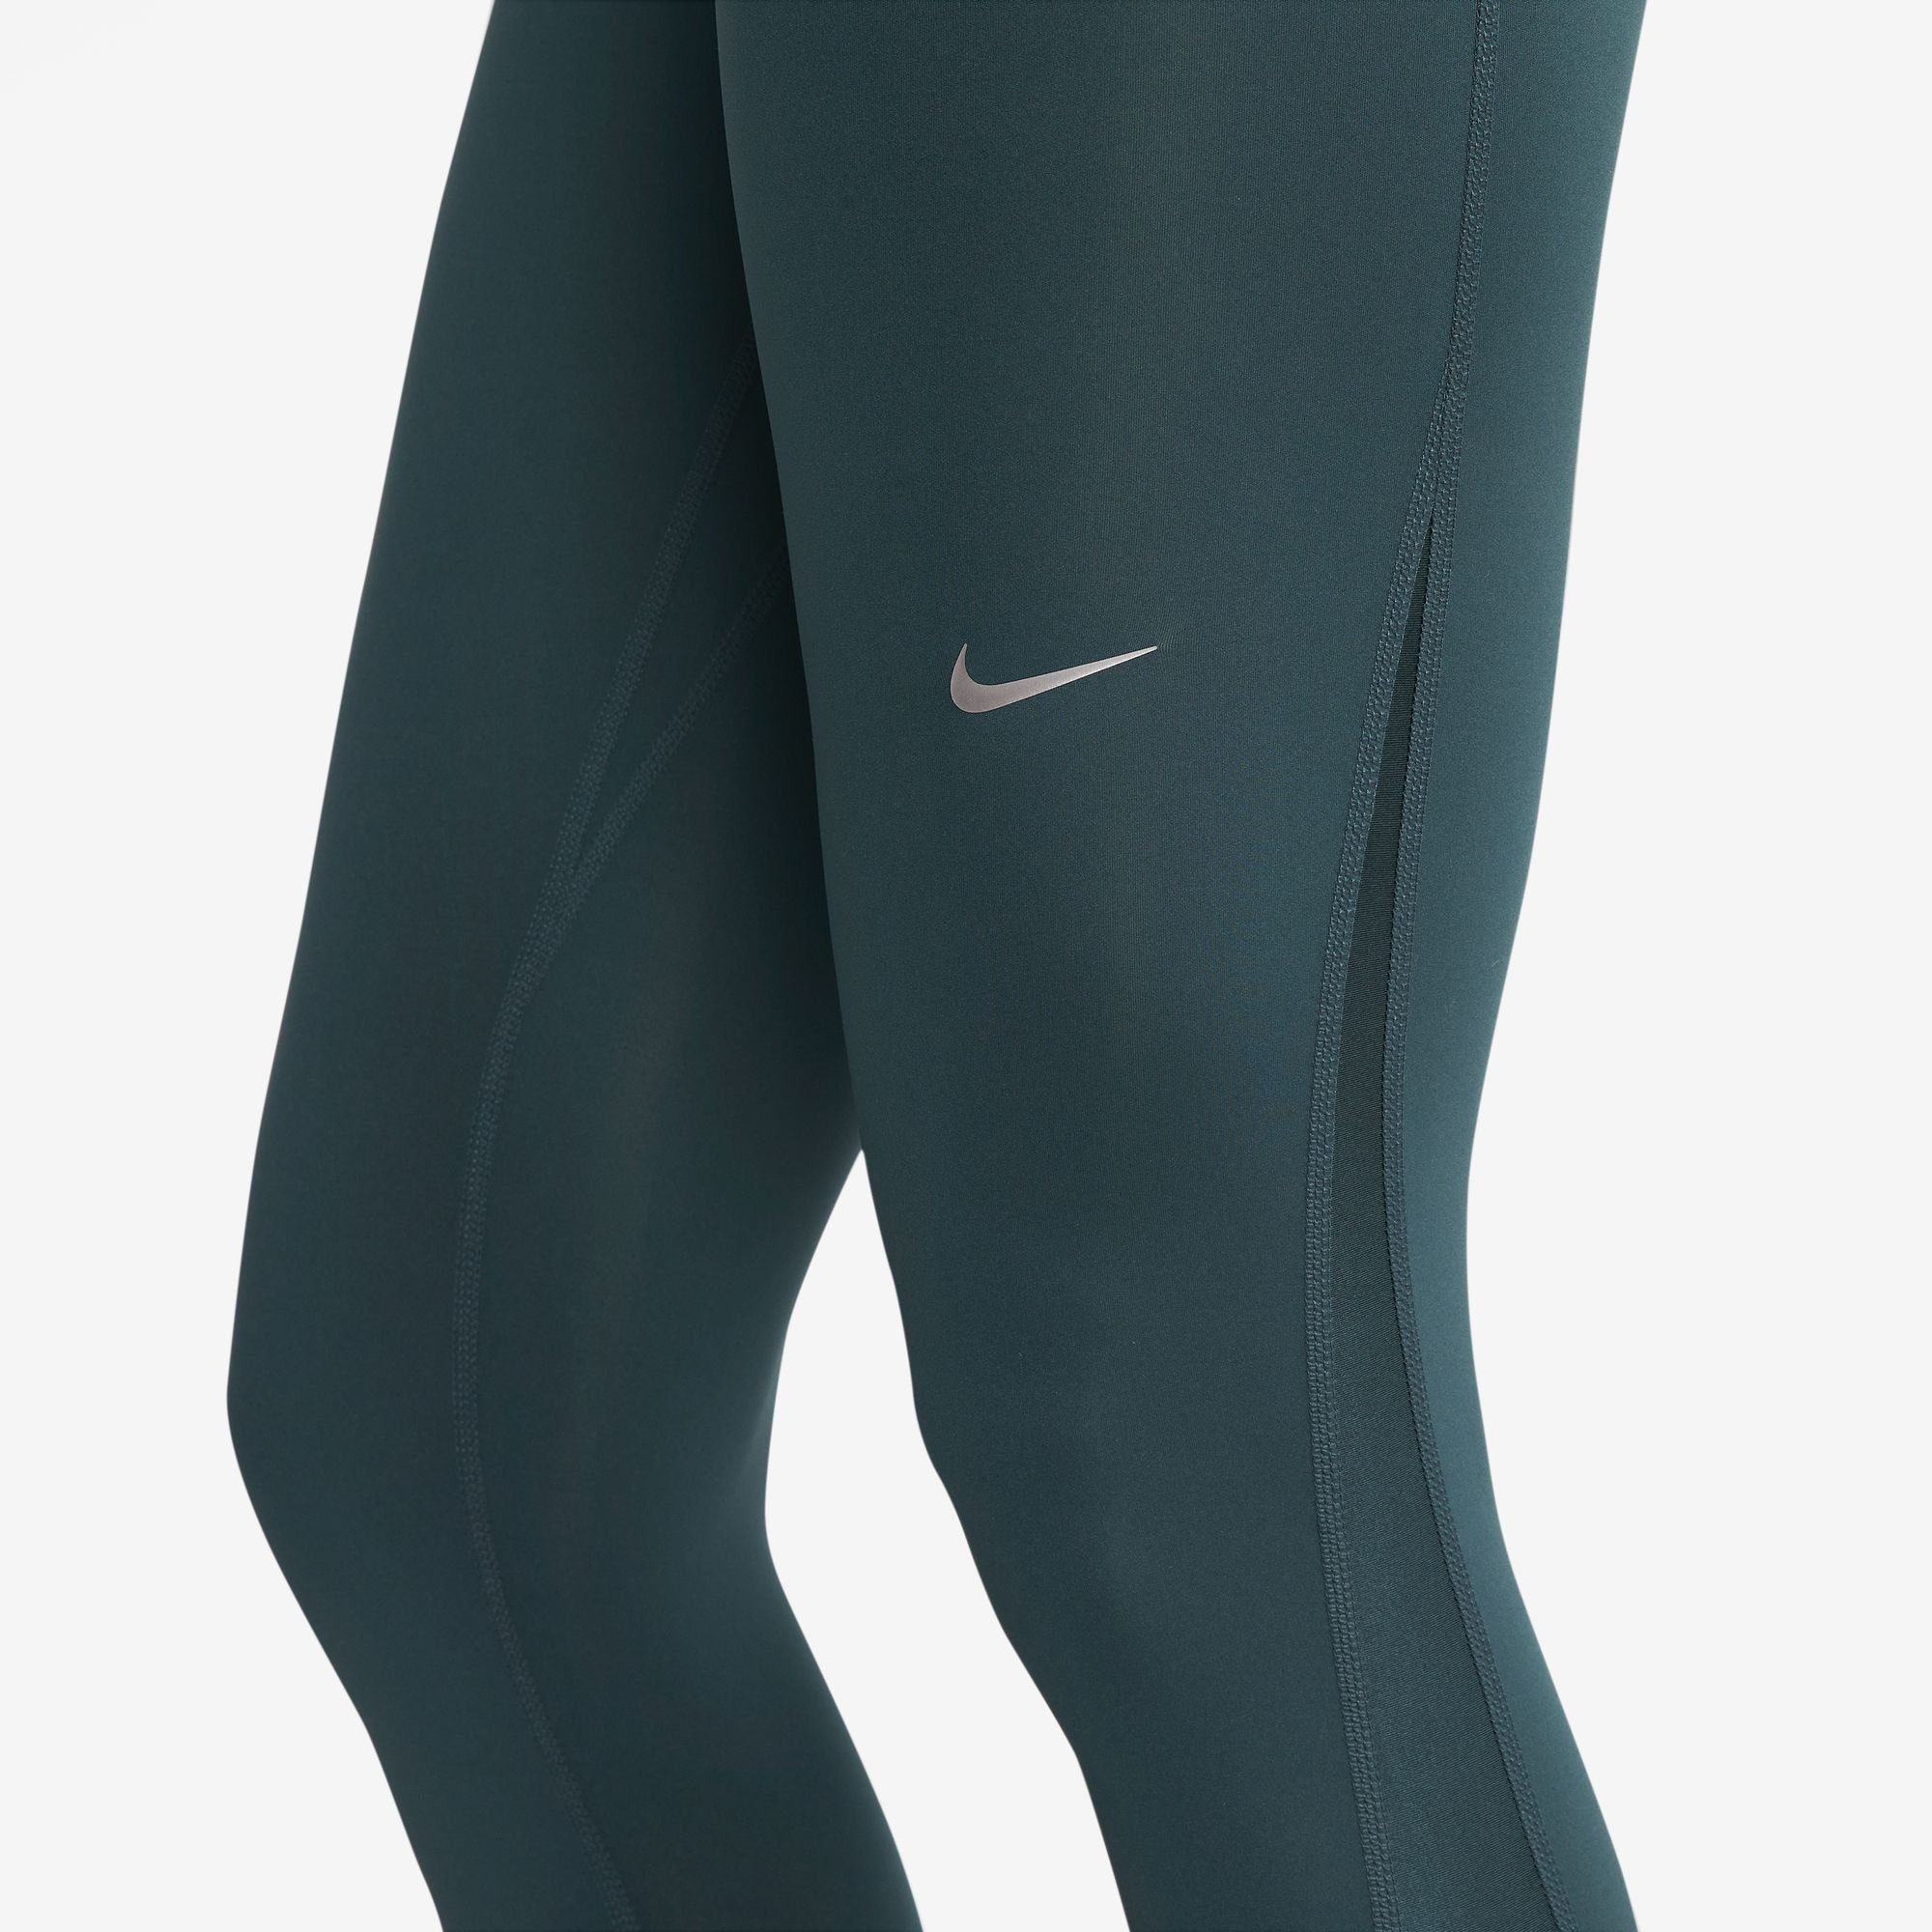 Nike SILVER Trainingstights / JUNGLE/METALLIC LEGGINGS WOMEN'S MID-RISE PRO DEEP